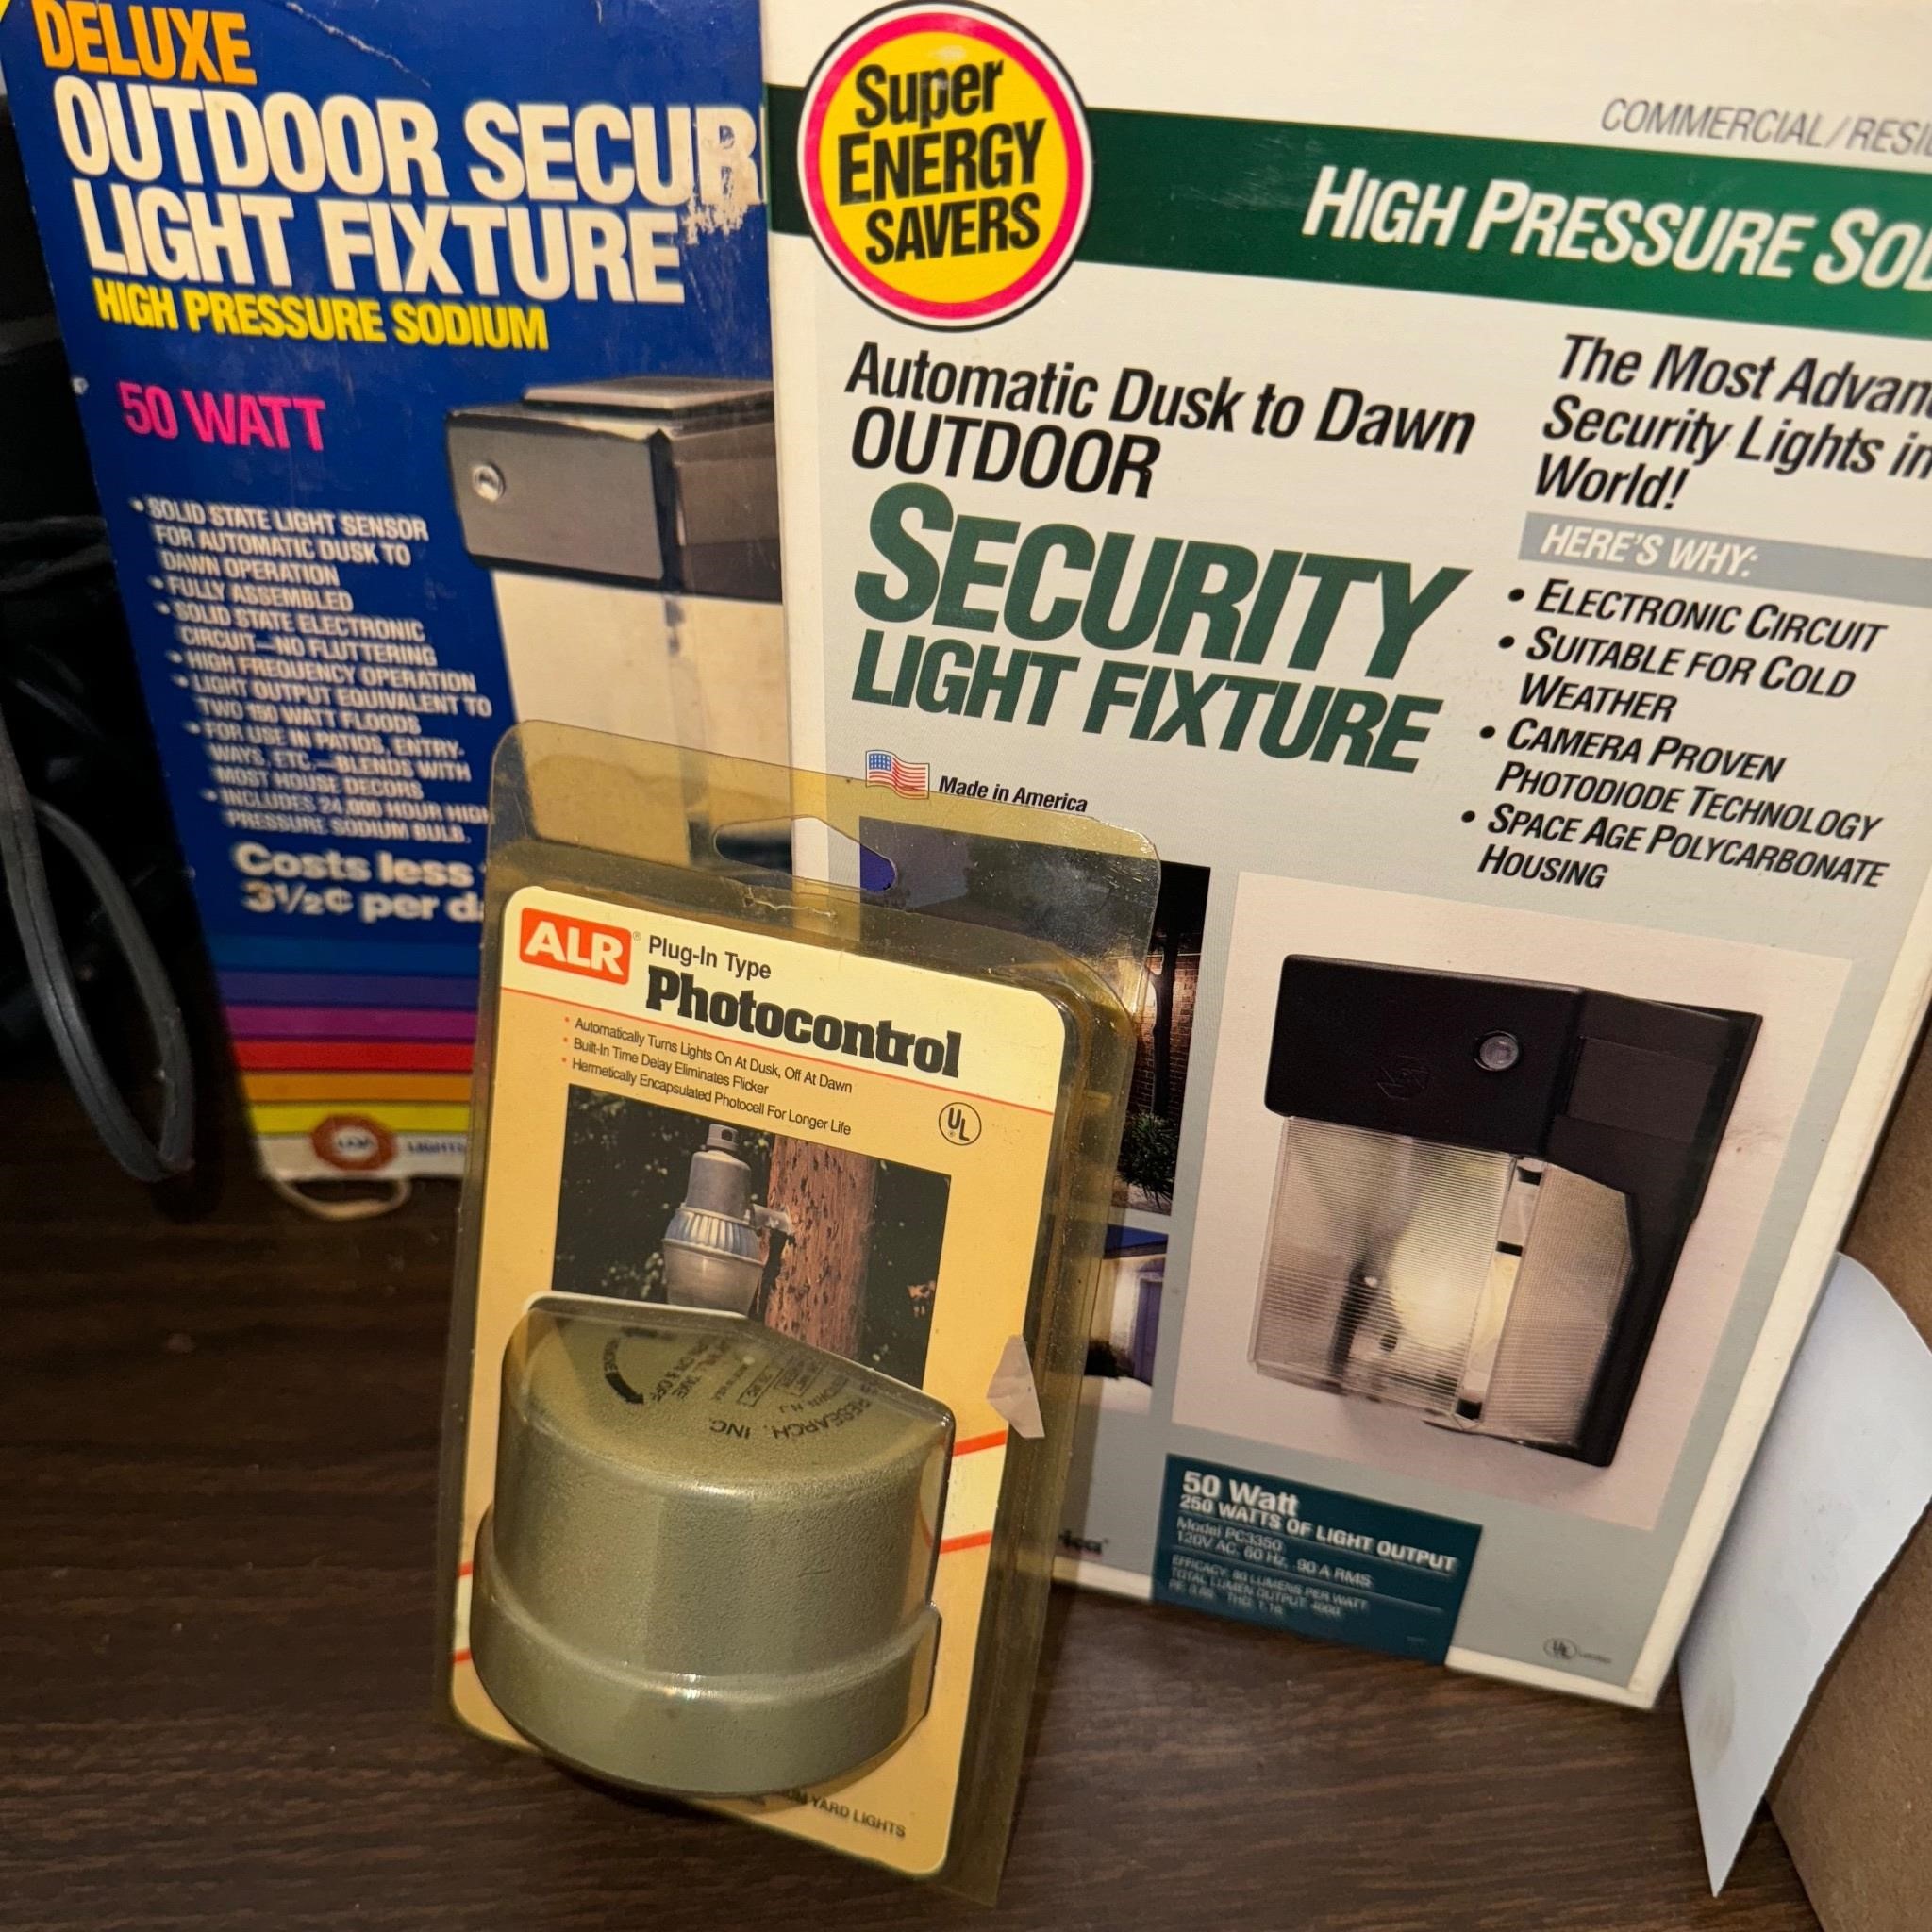 Outdoor security lights, ALR photo controller